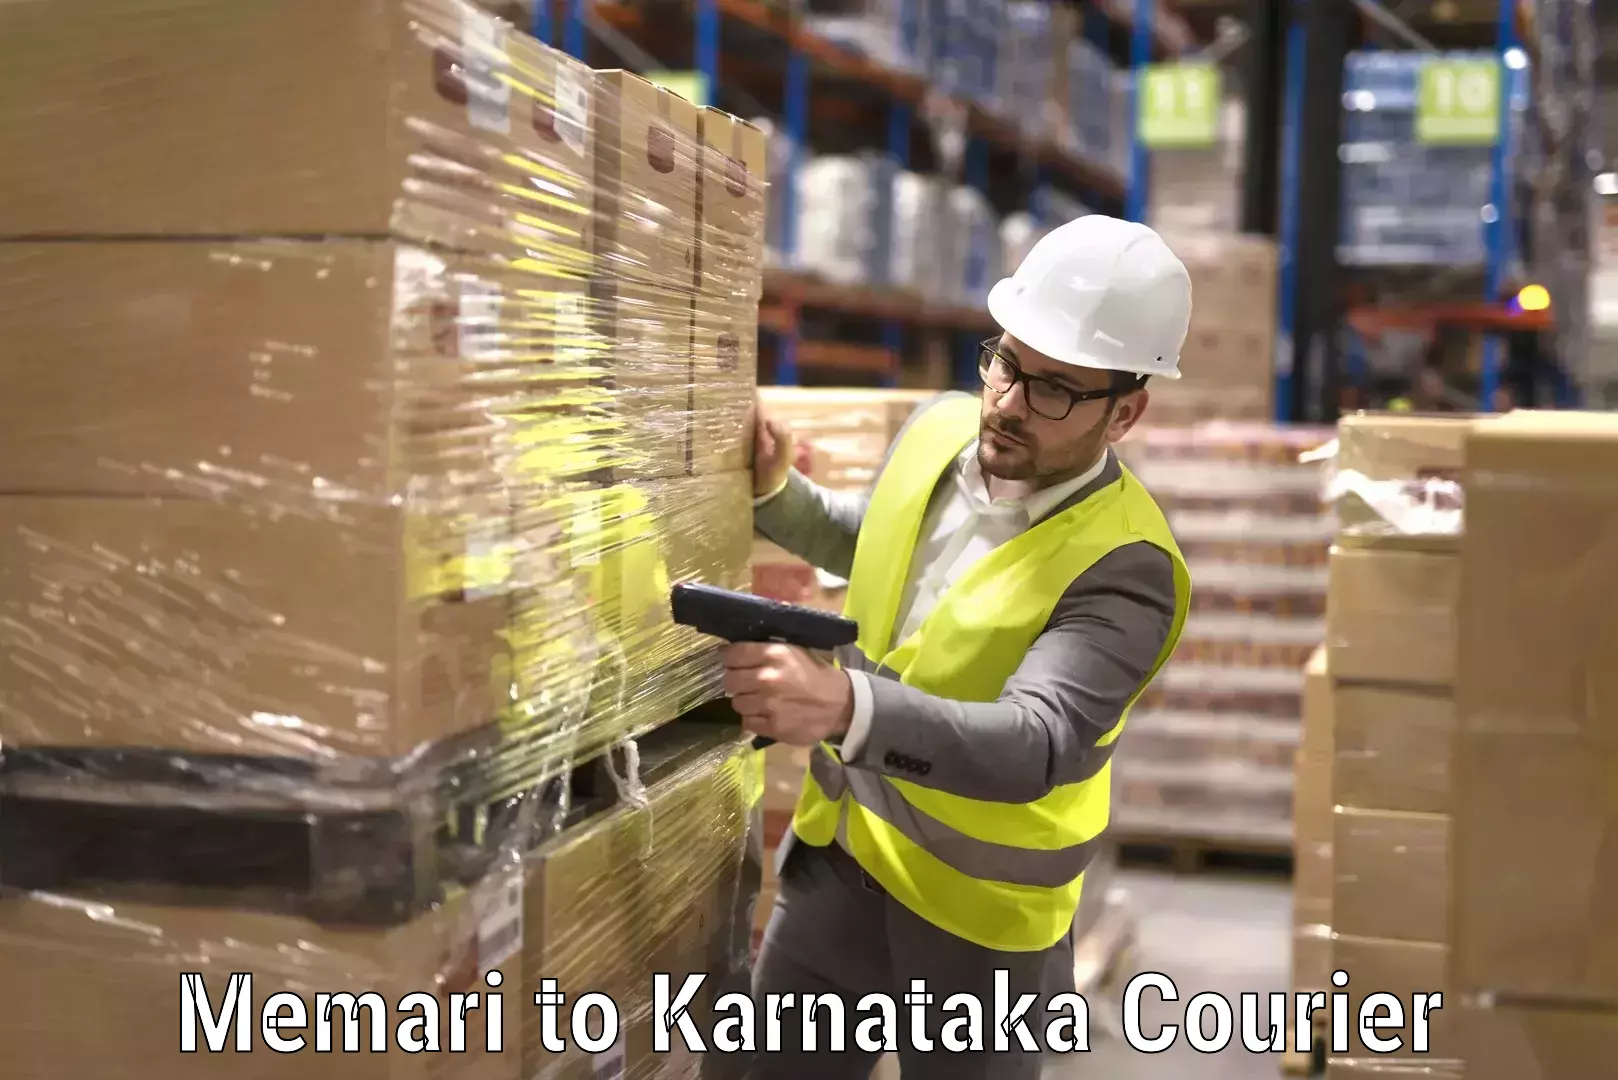 Furniture moving experts Memari to Karnataka